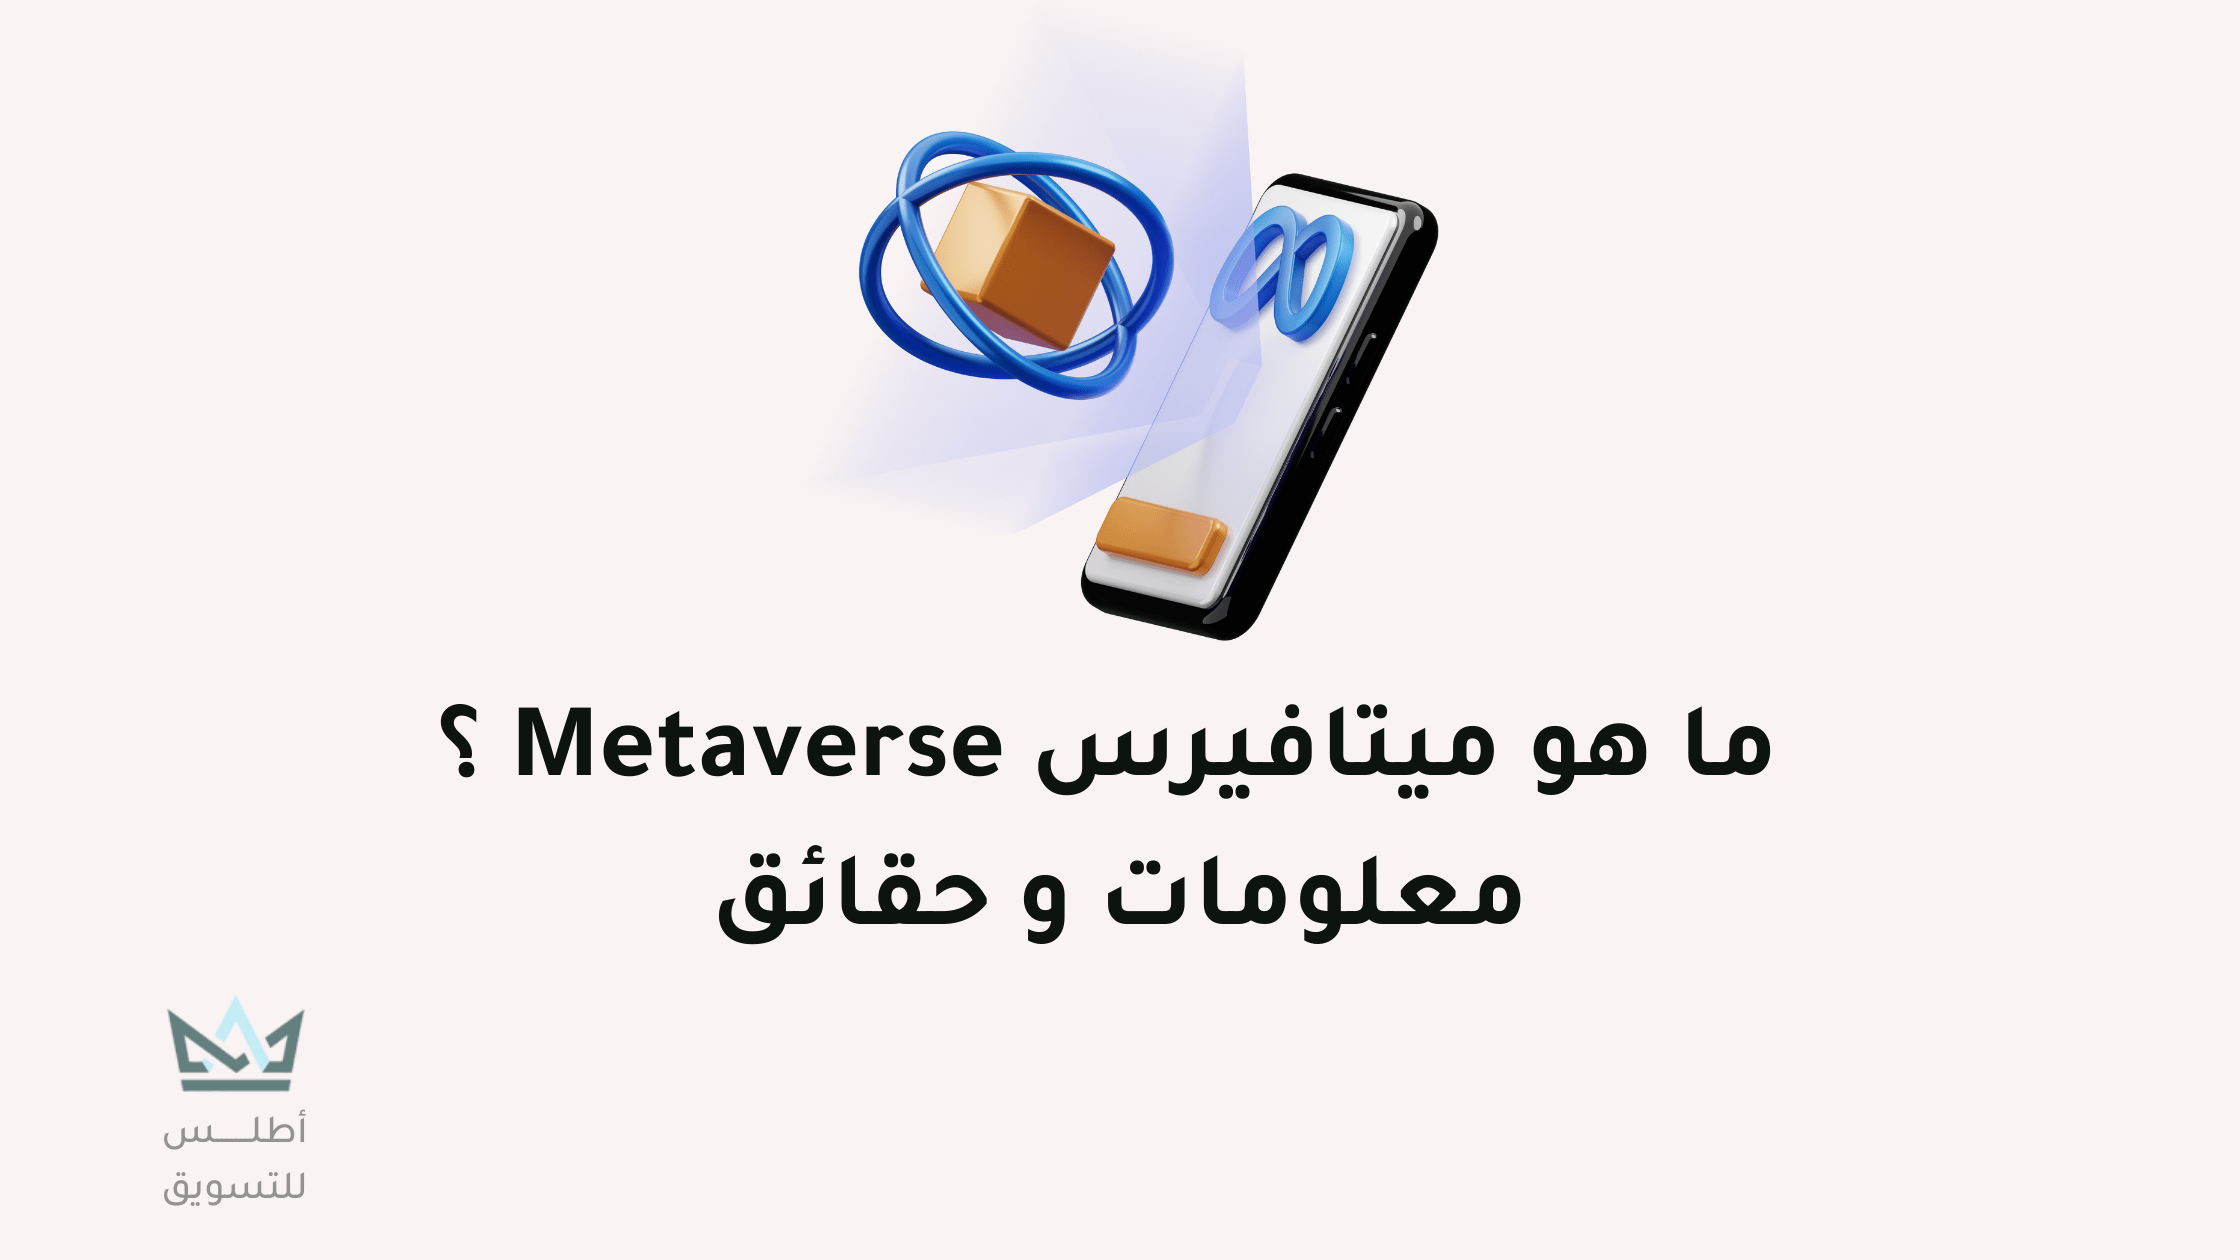 ما هو ميتافيرس – Metaverse و كيف يعمل؟